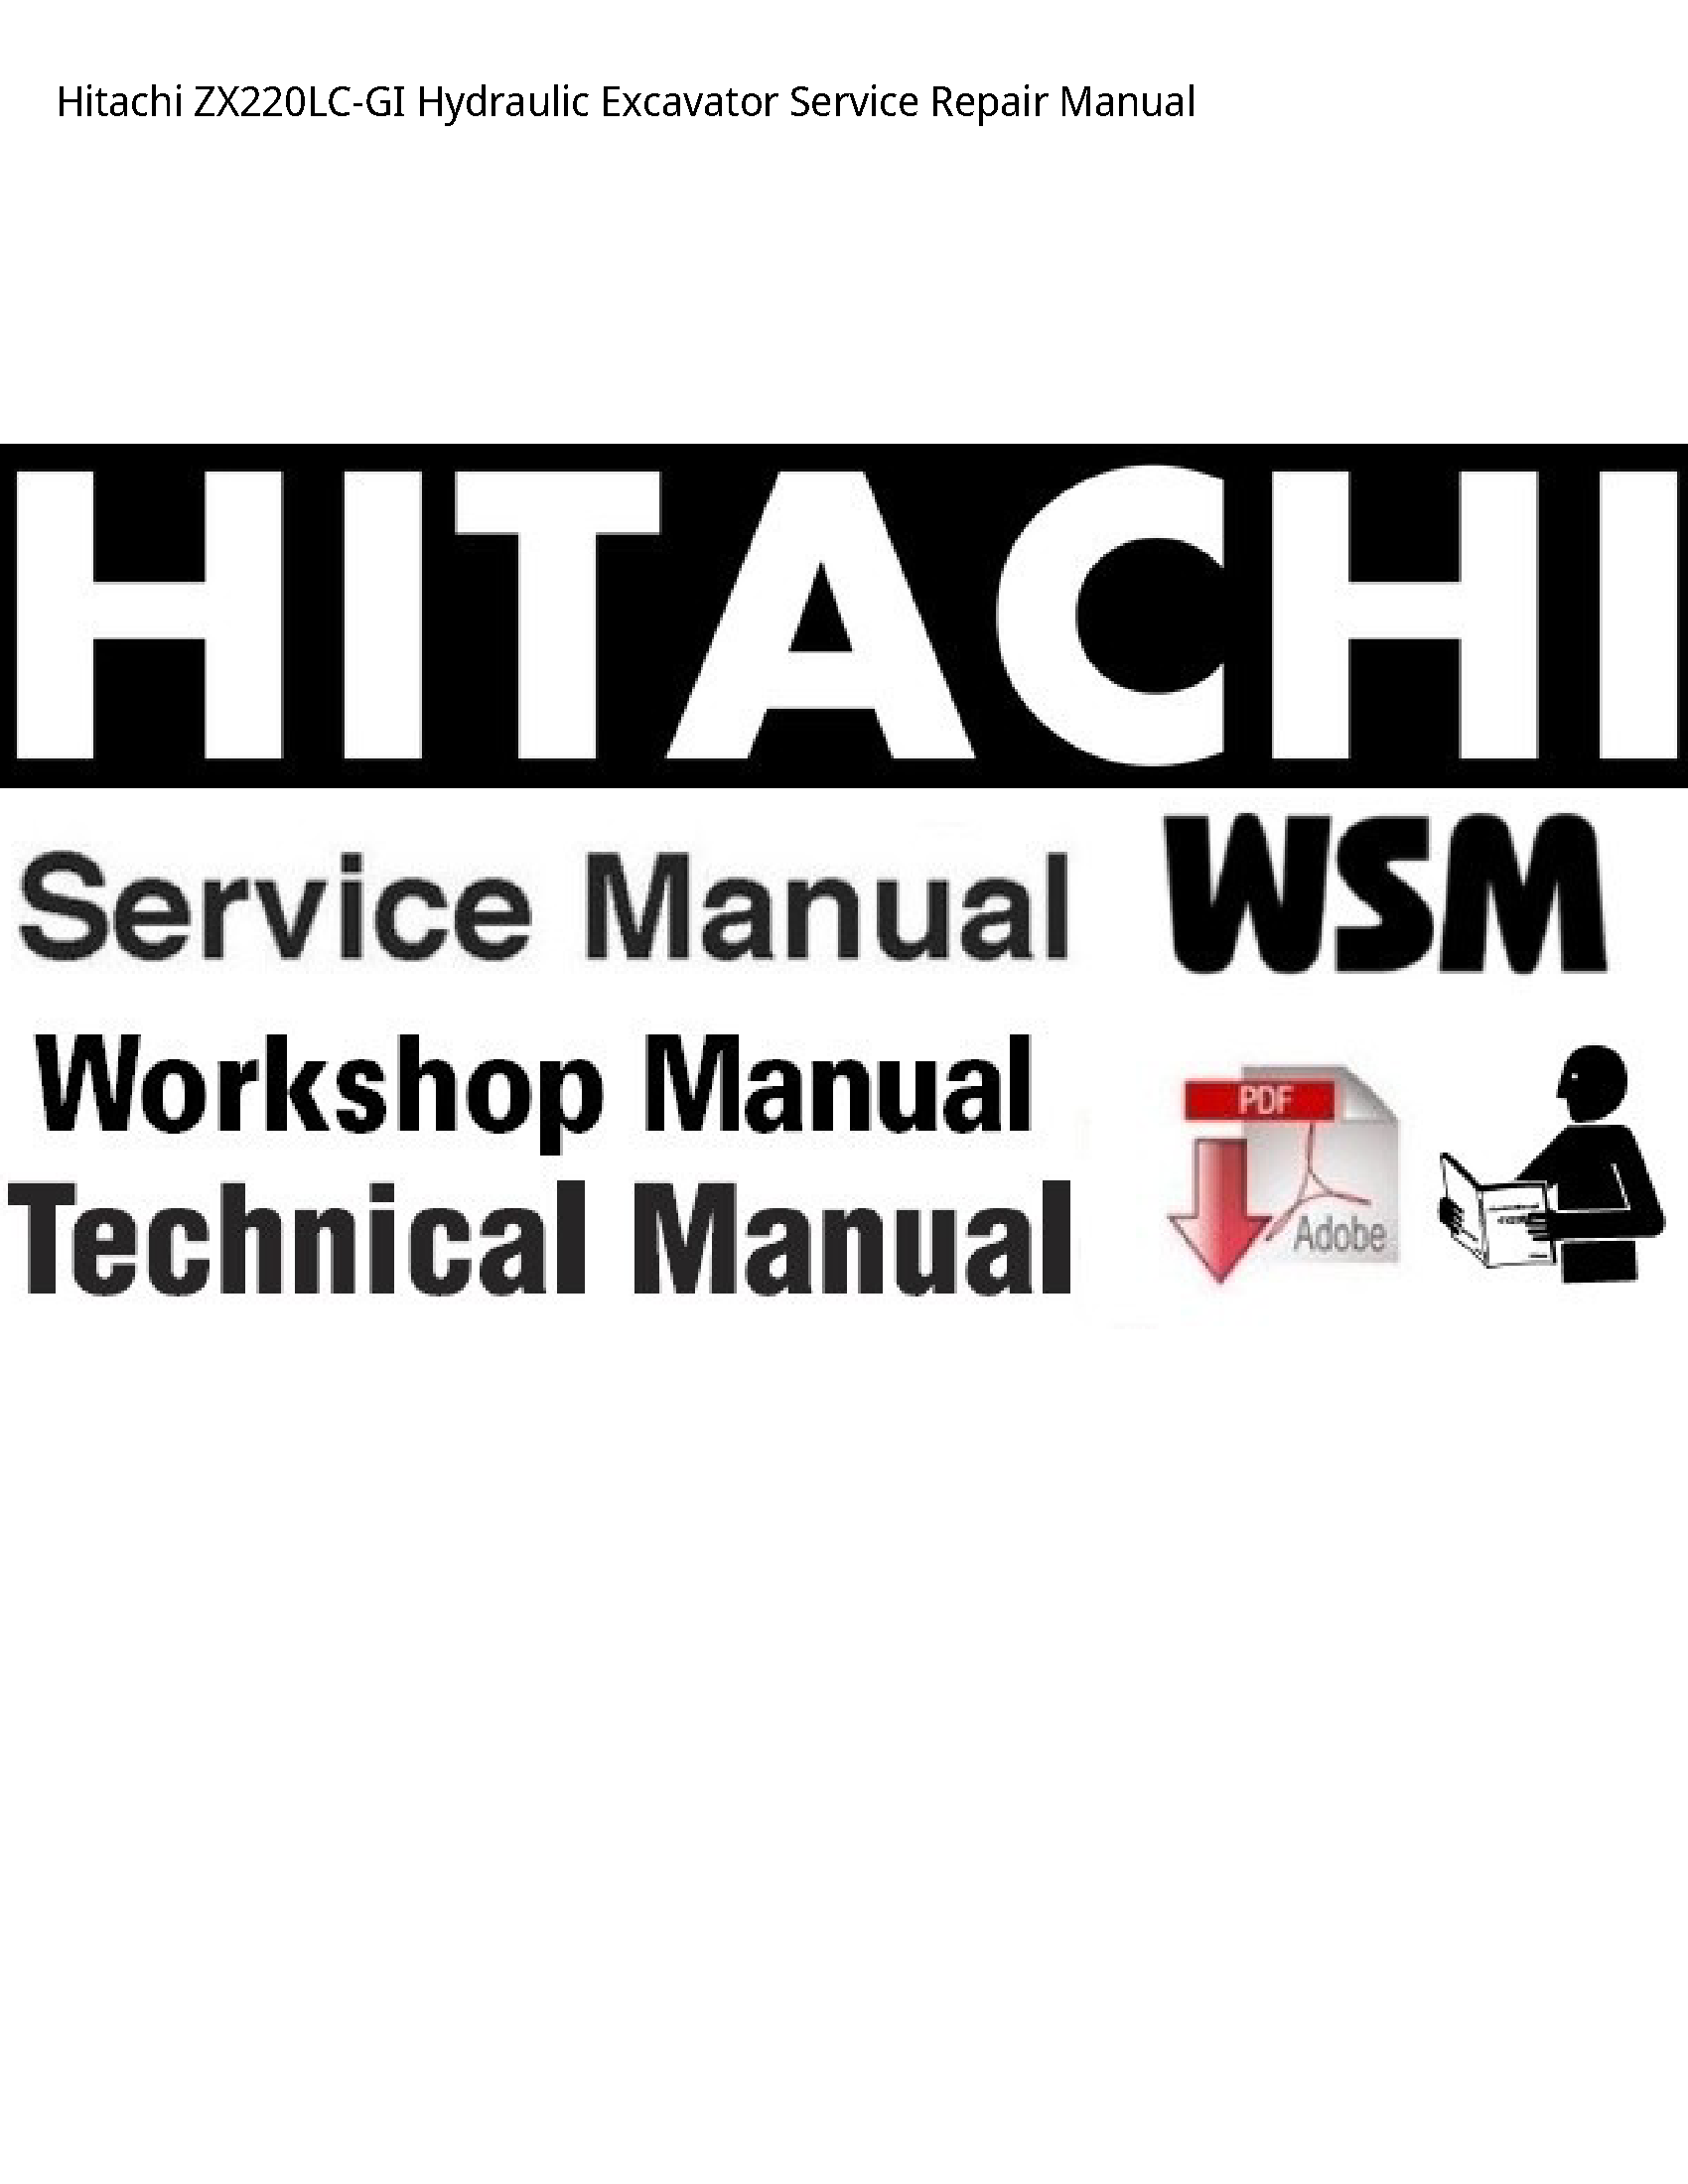 Hitachi ZX220LC-GI Hydraulic Excavator manual